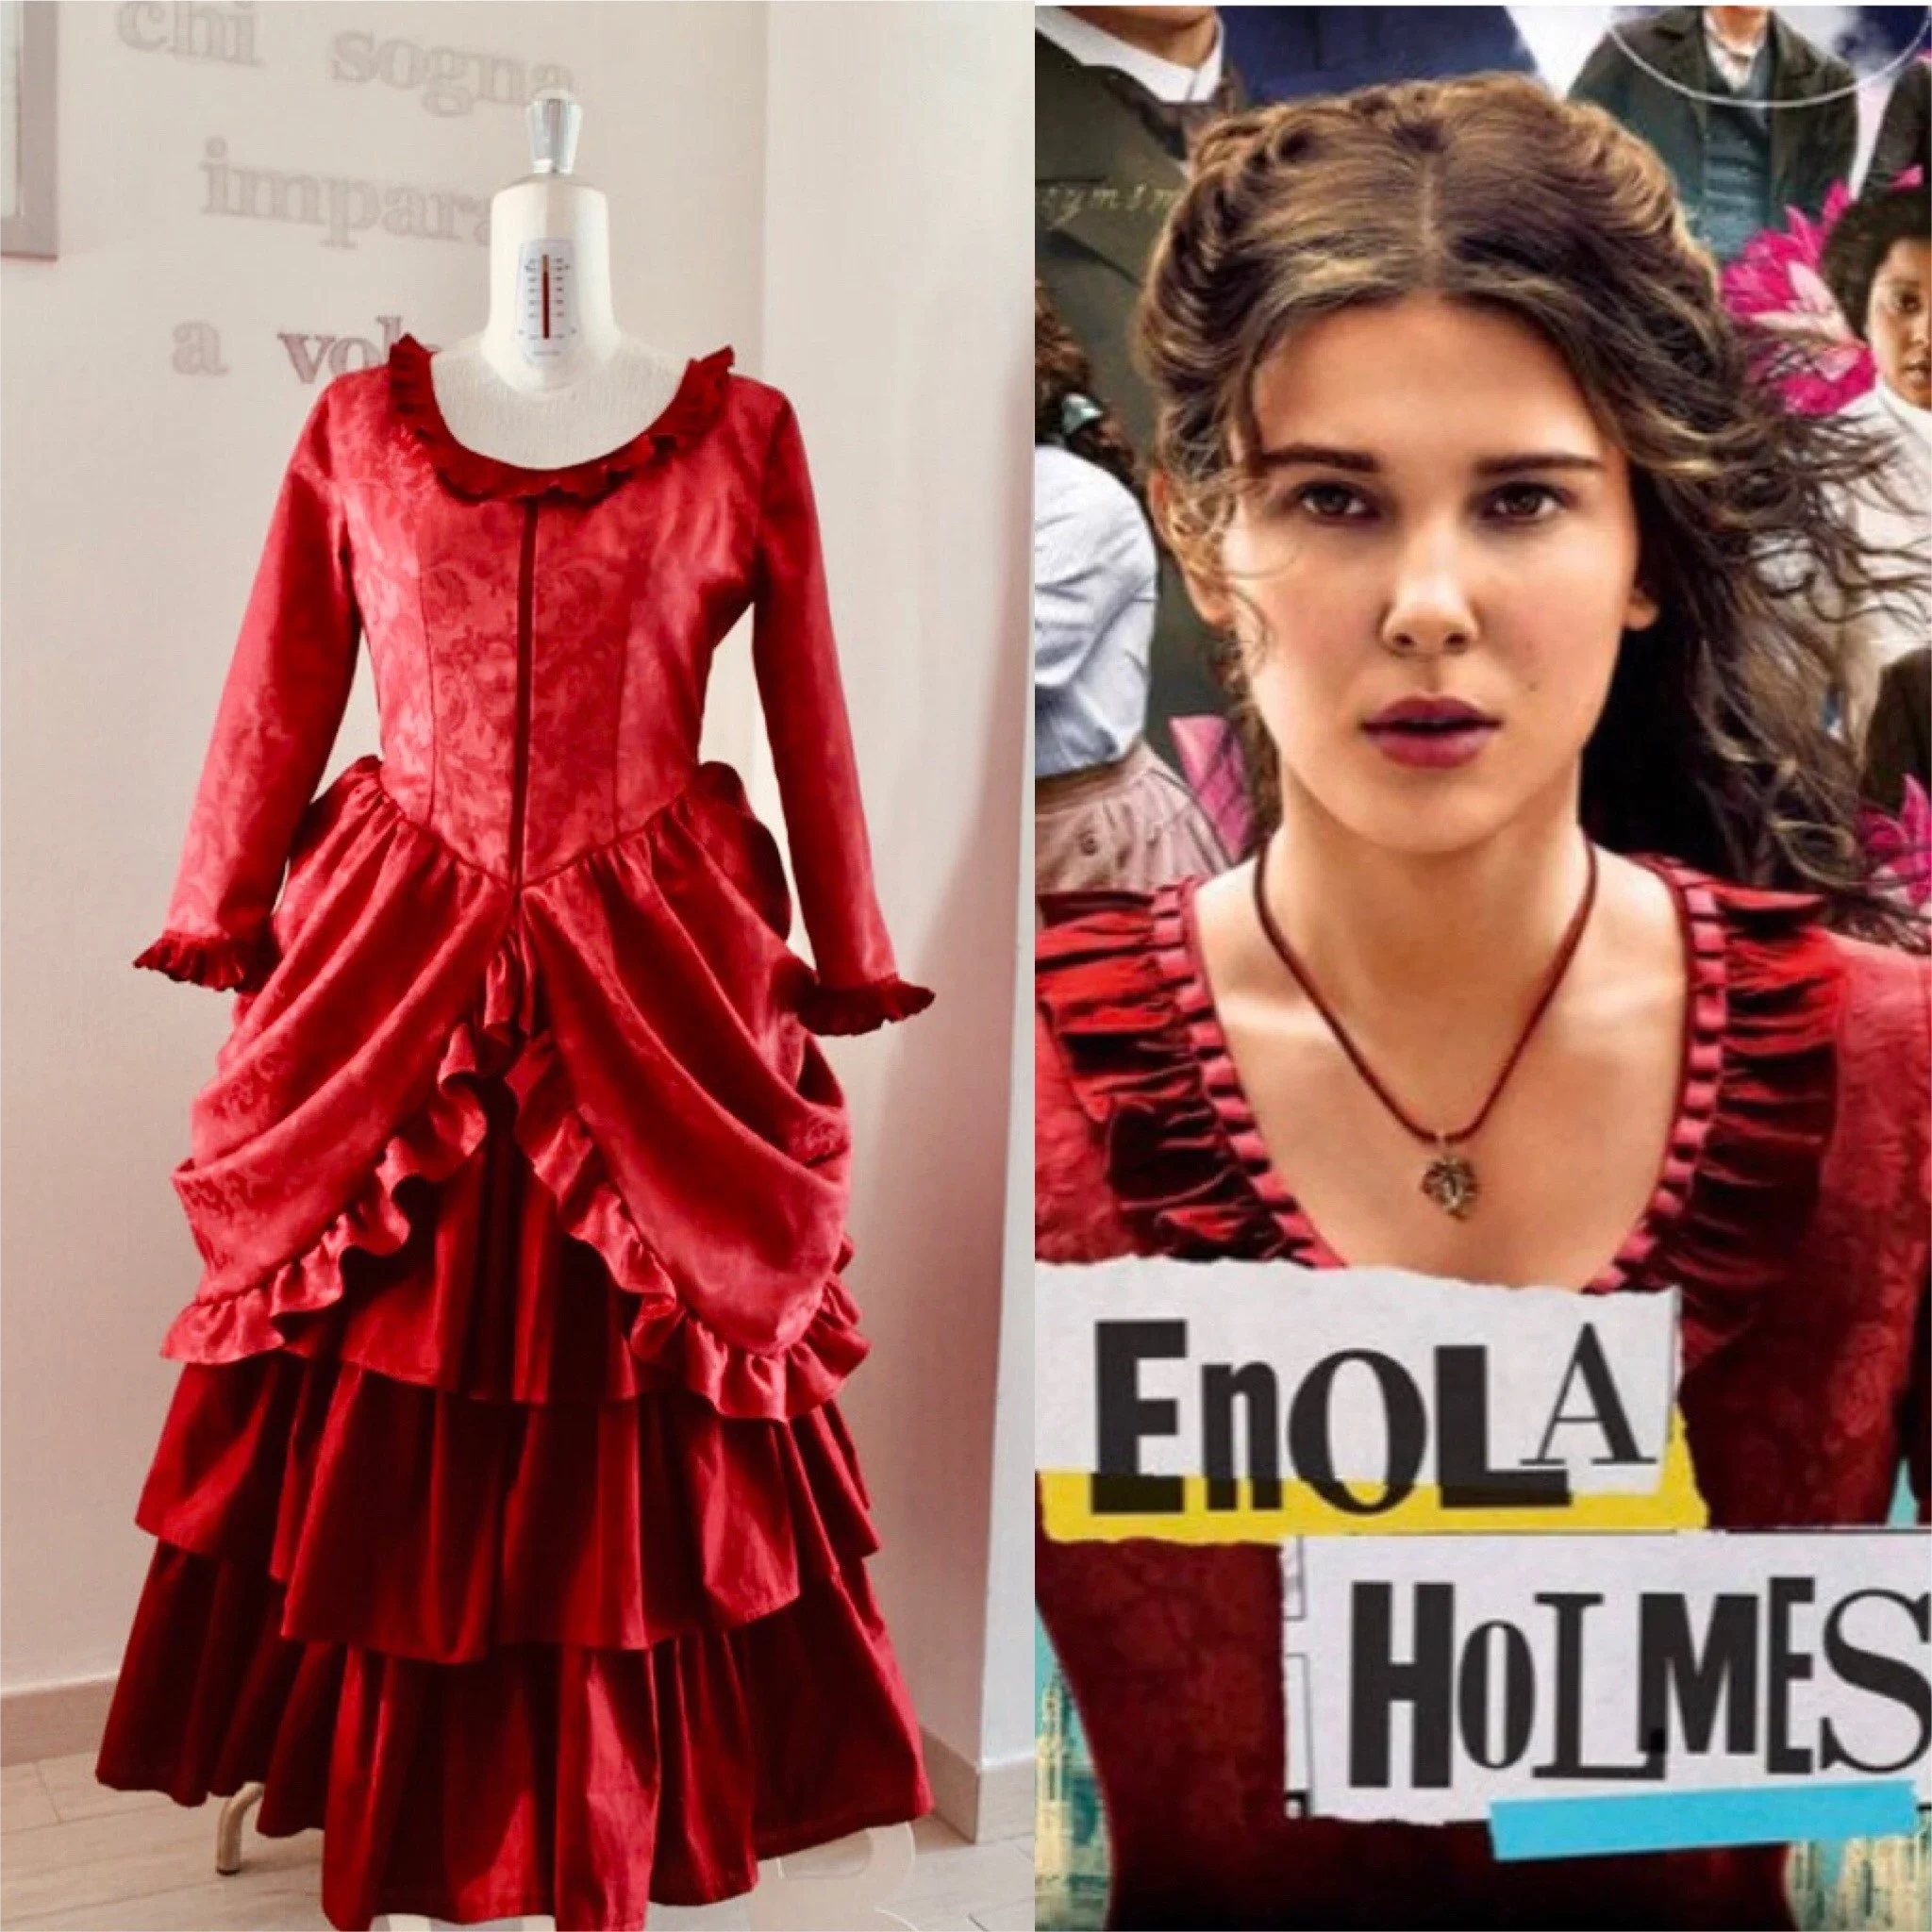 Enola Holmes cosplay elbise Victoria Enola Holmes kırmızı telaş balo elbise 1880 s kırmızı balo rokoko elbise kıyafeti custom made